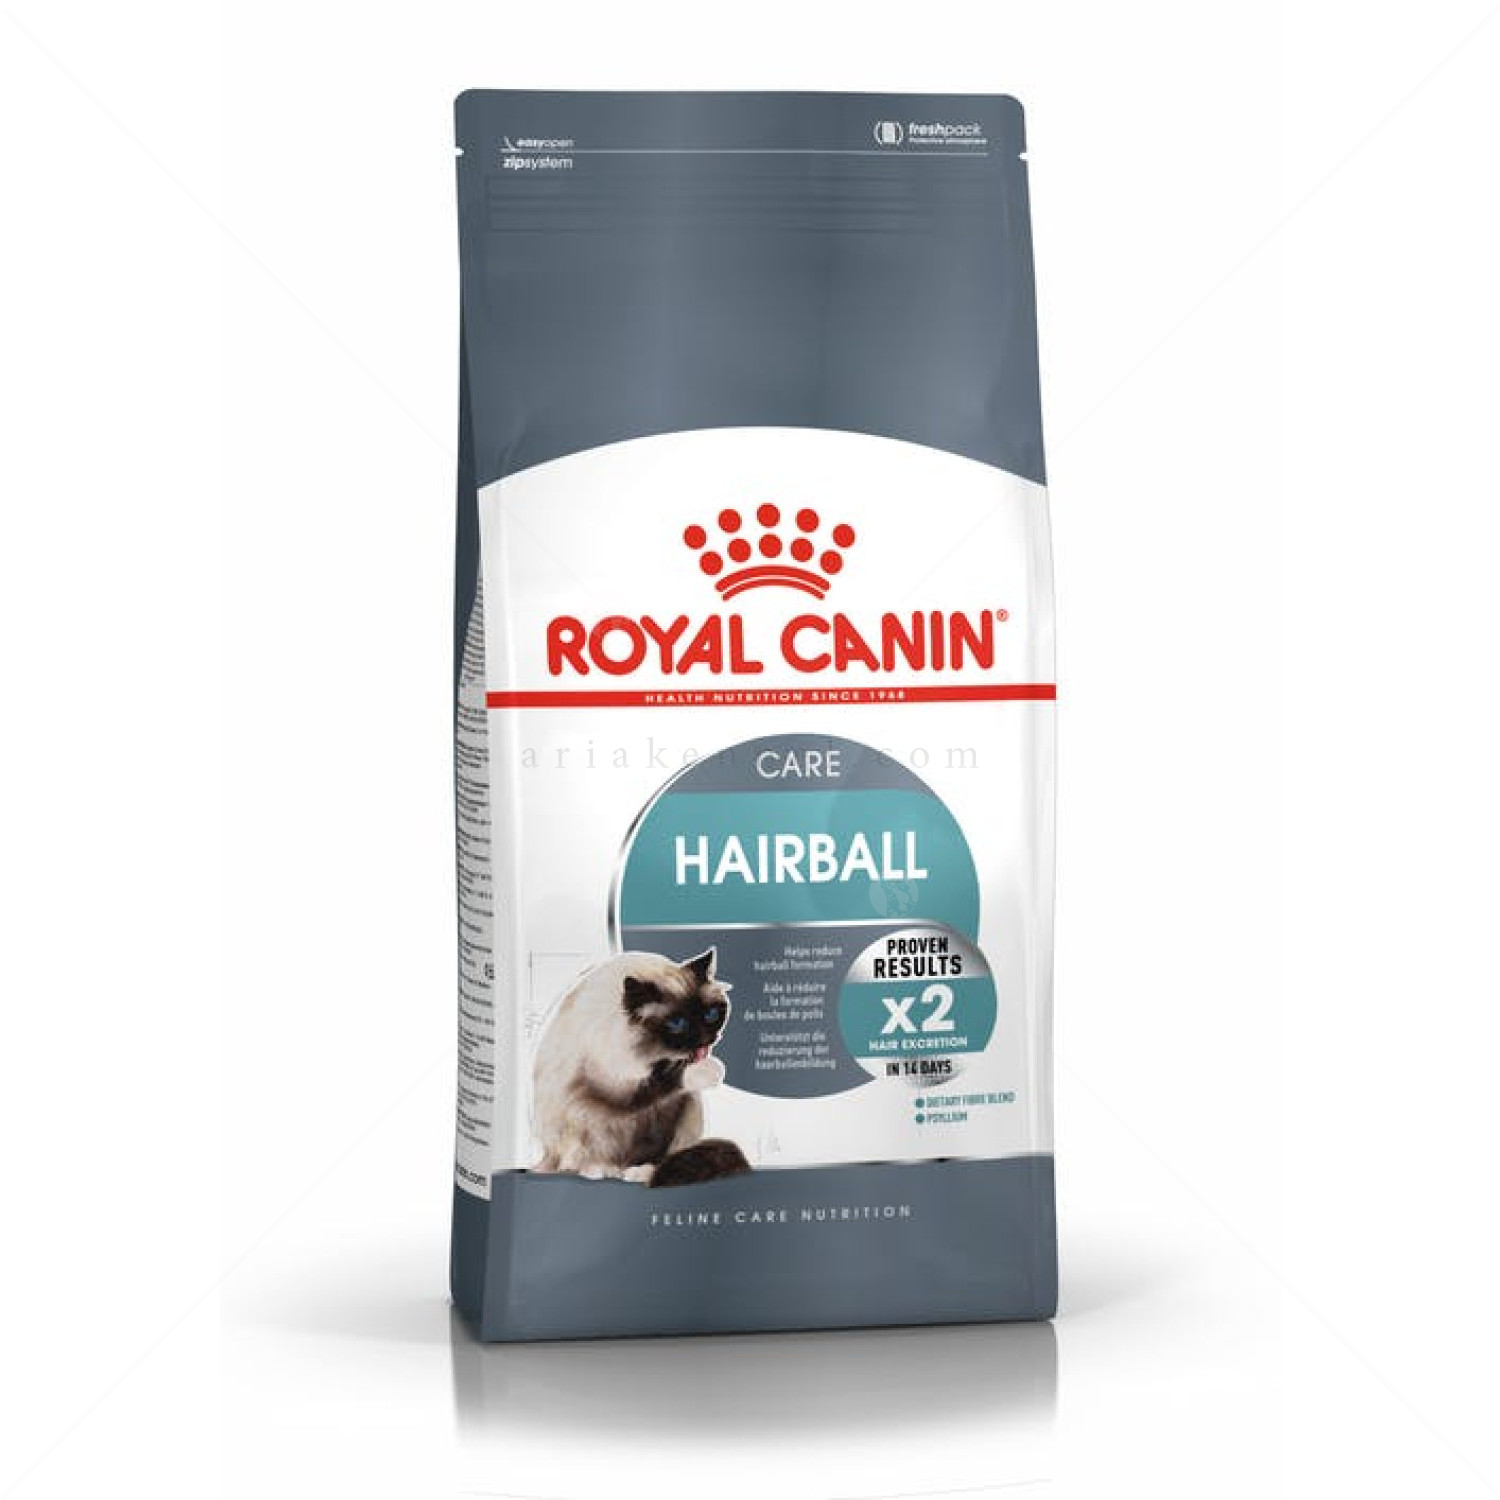 ROYAL CANIN® Hairball Care 10 кг.